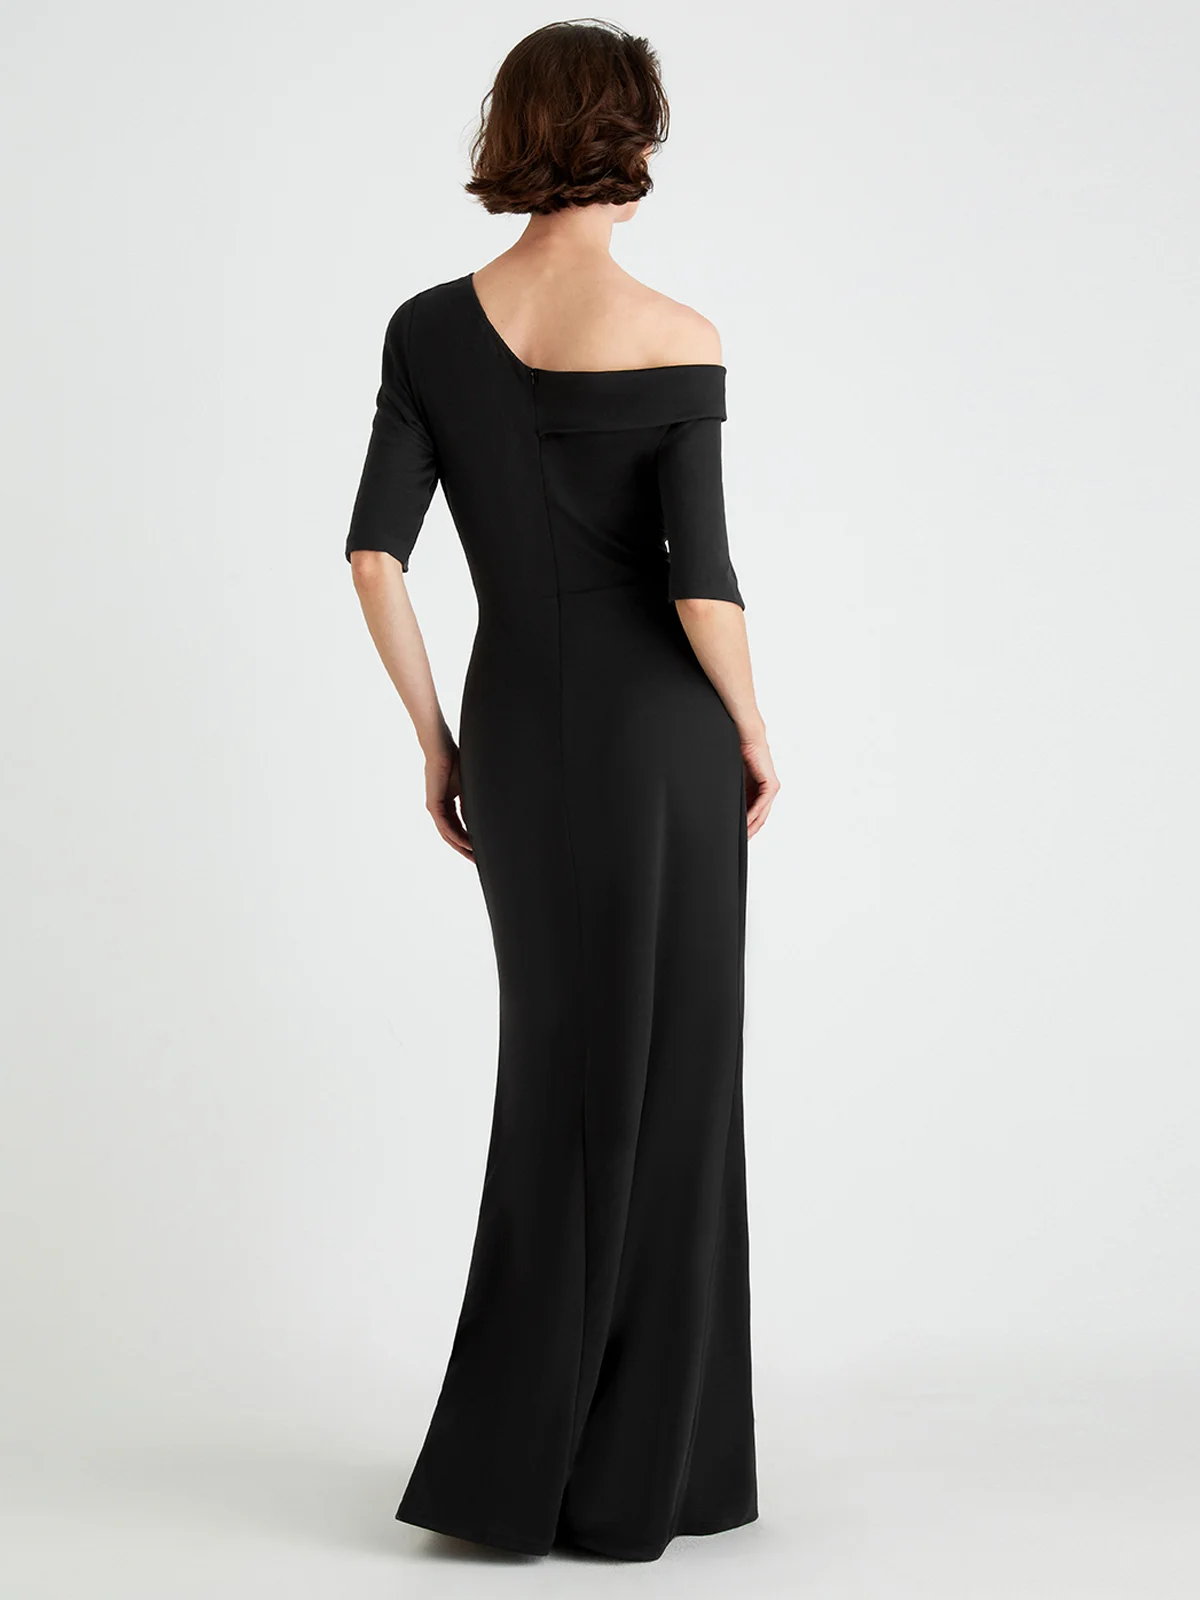 Regular Fit Elegant Evening Black Maxi Dress Wedding | stylewe